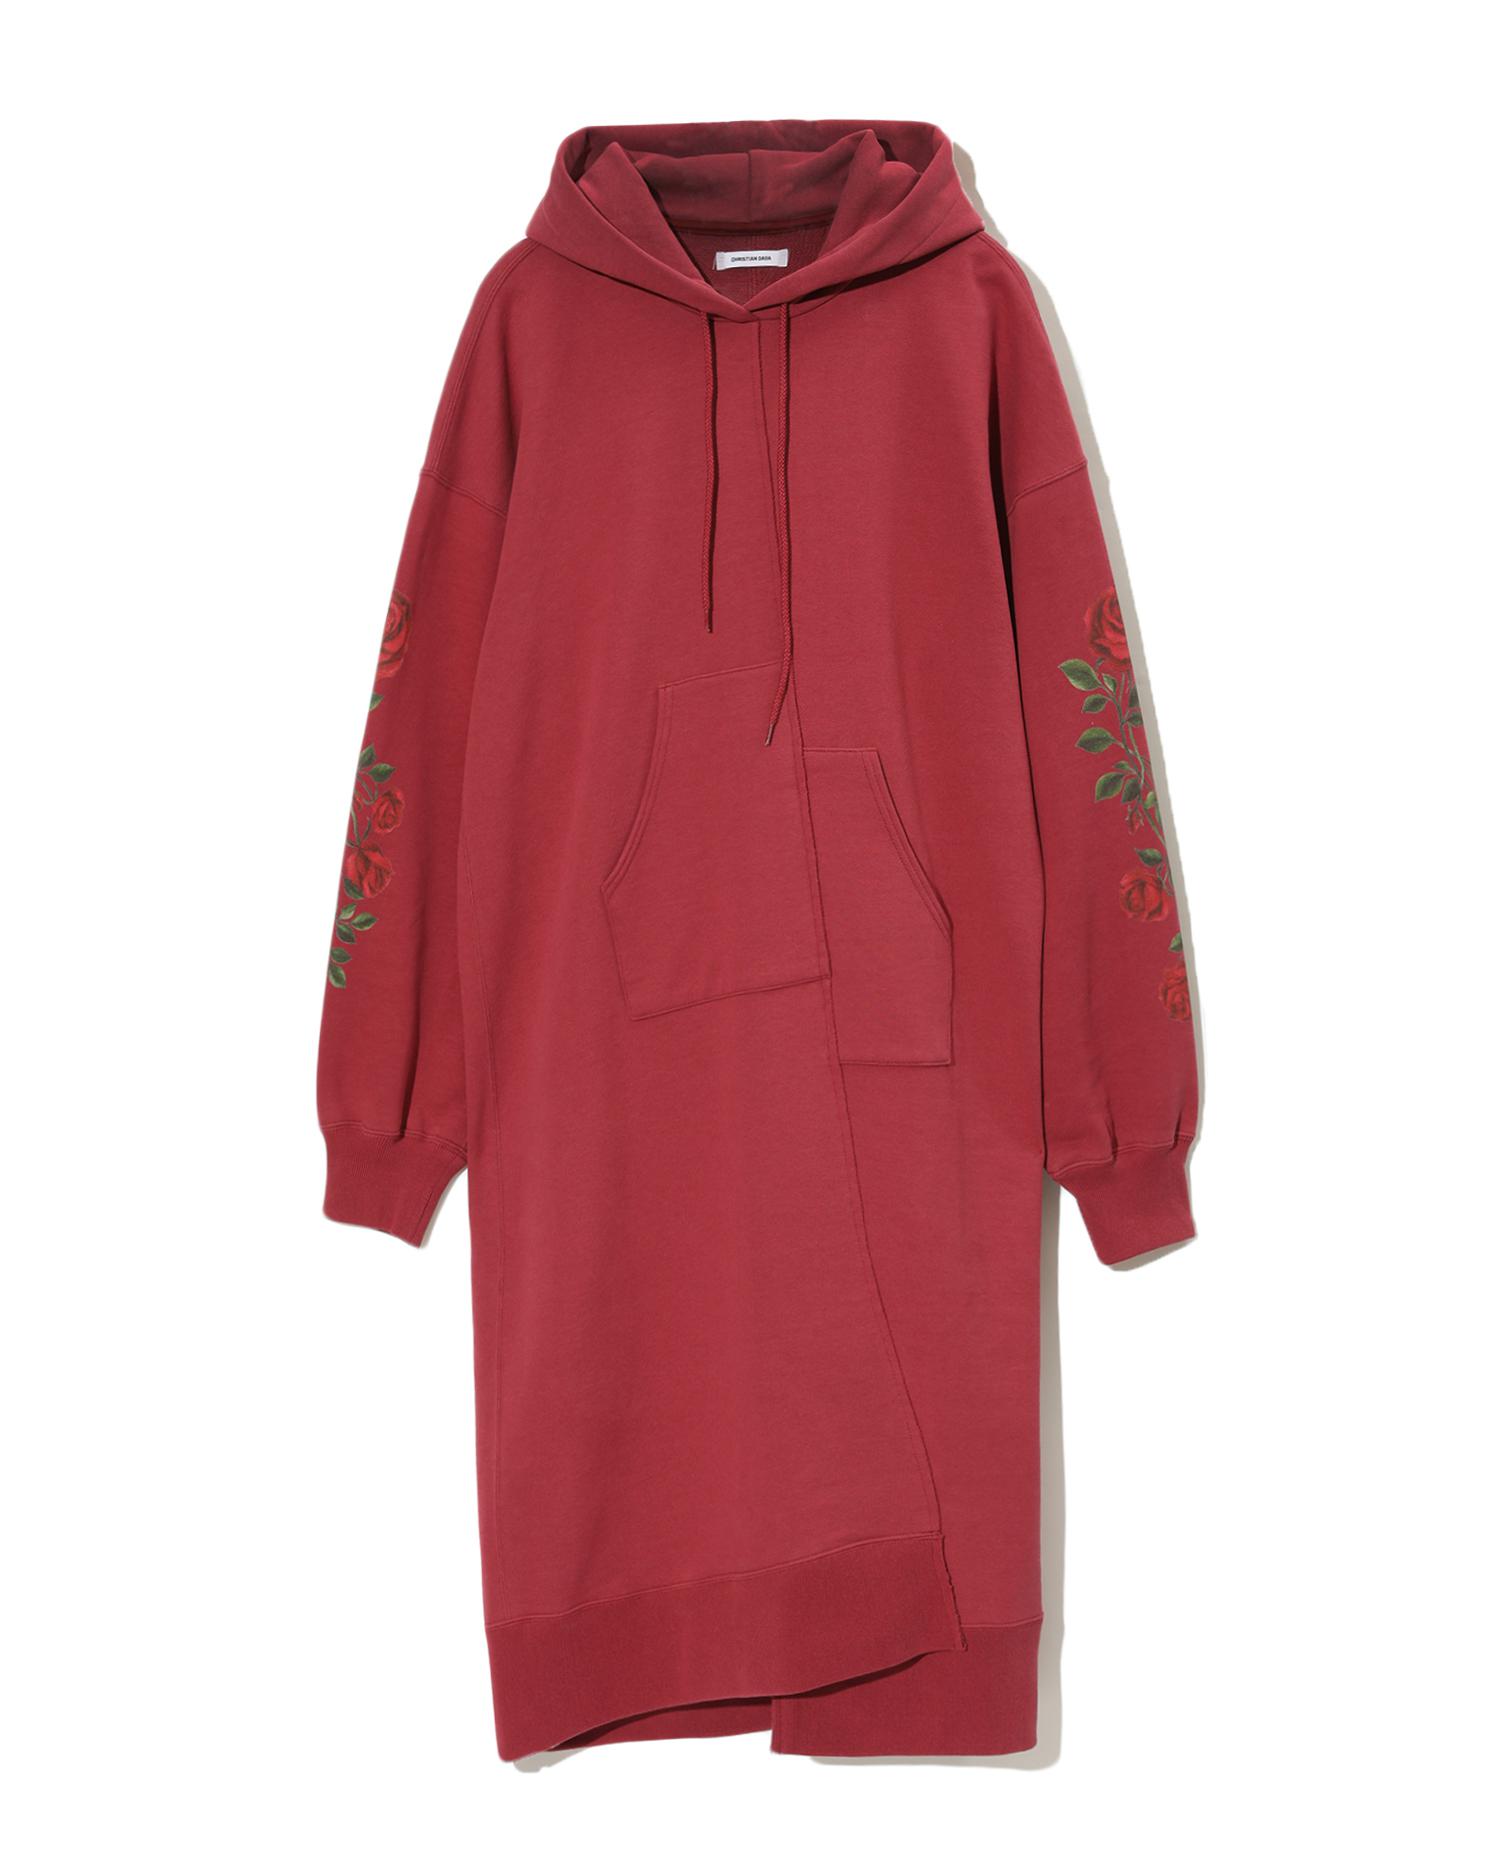 Rose hoodie dress by CHRISTIAN DADA